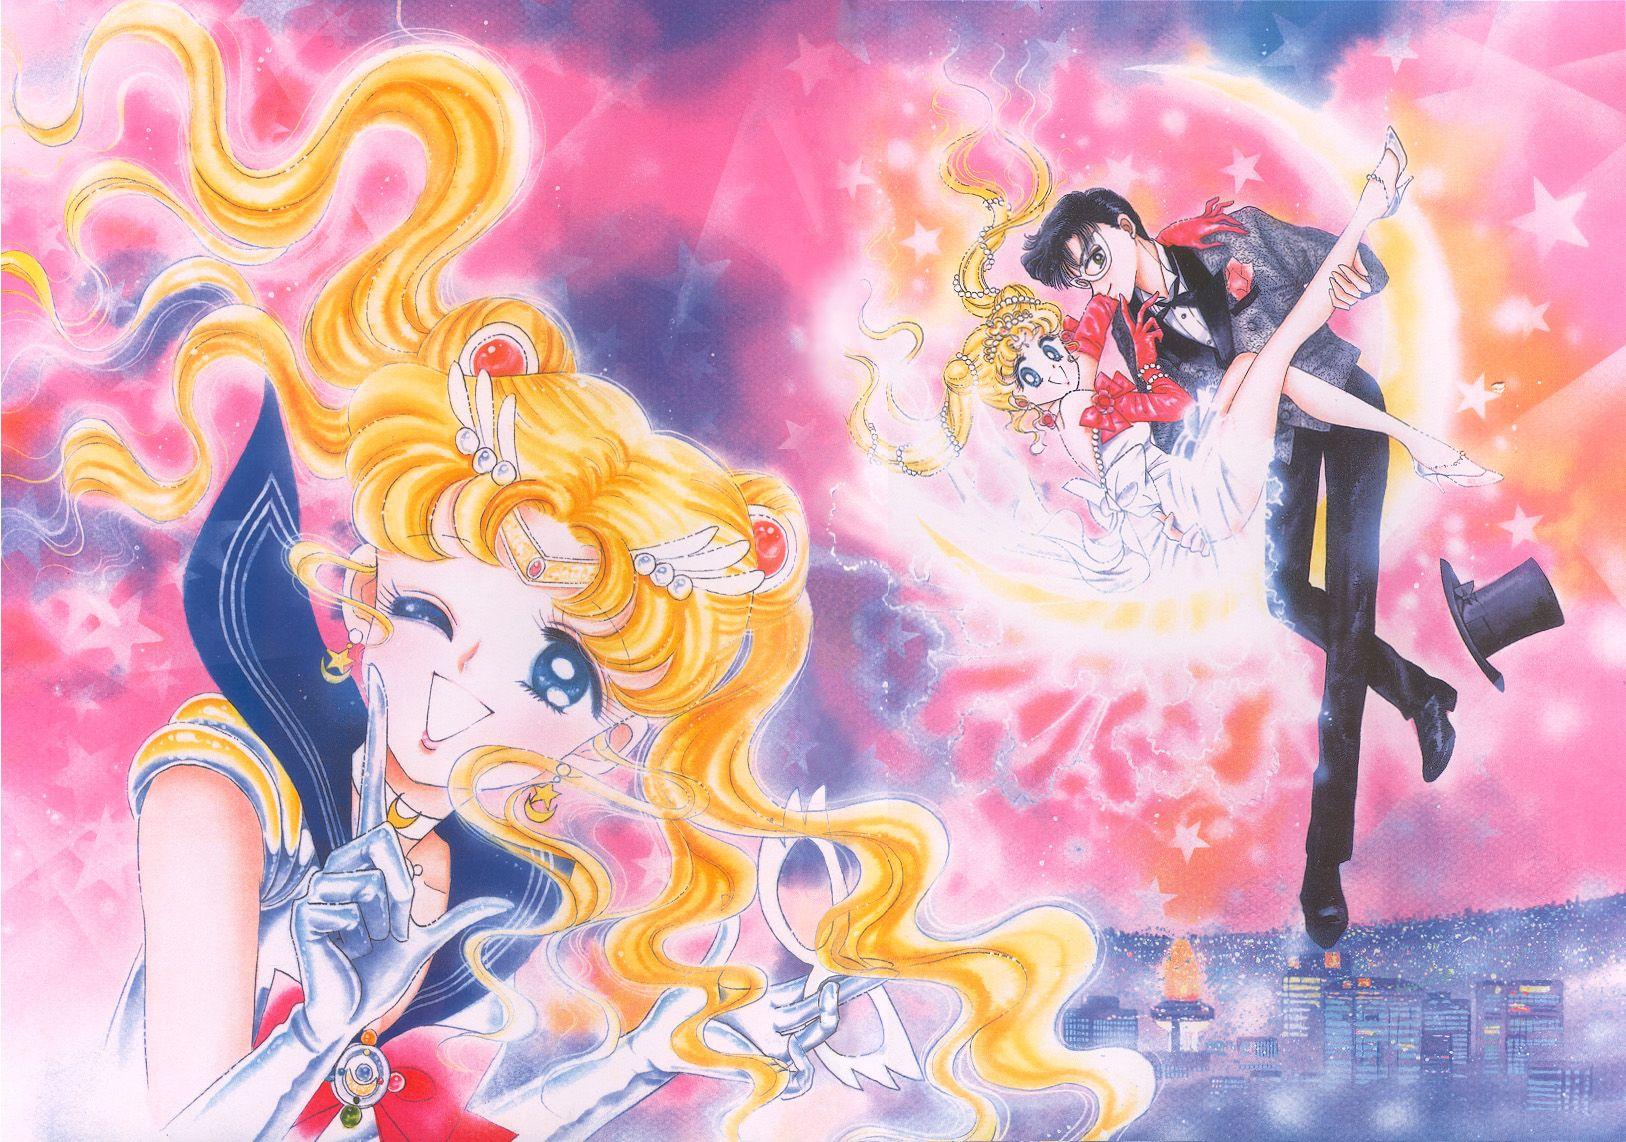 Usagi, Tuxedo Mask, Sailor Moon Artbook. Sailor Moon